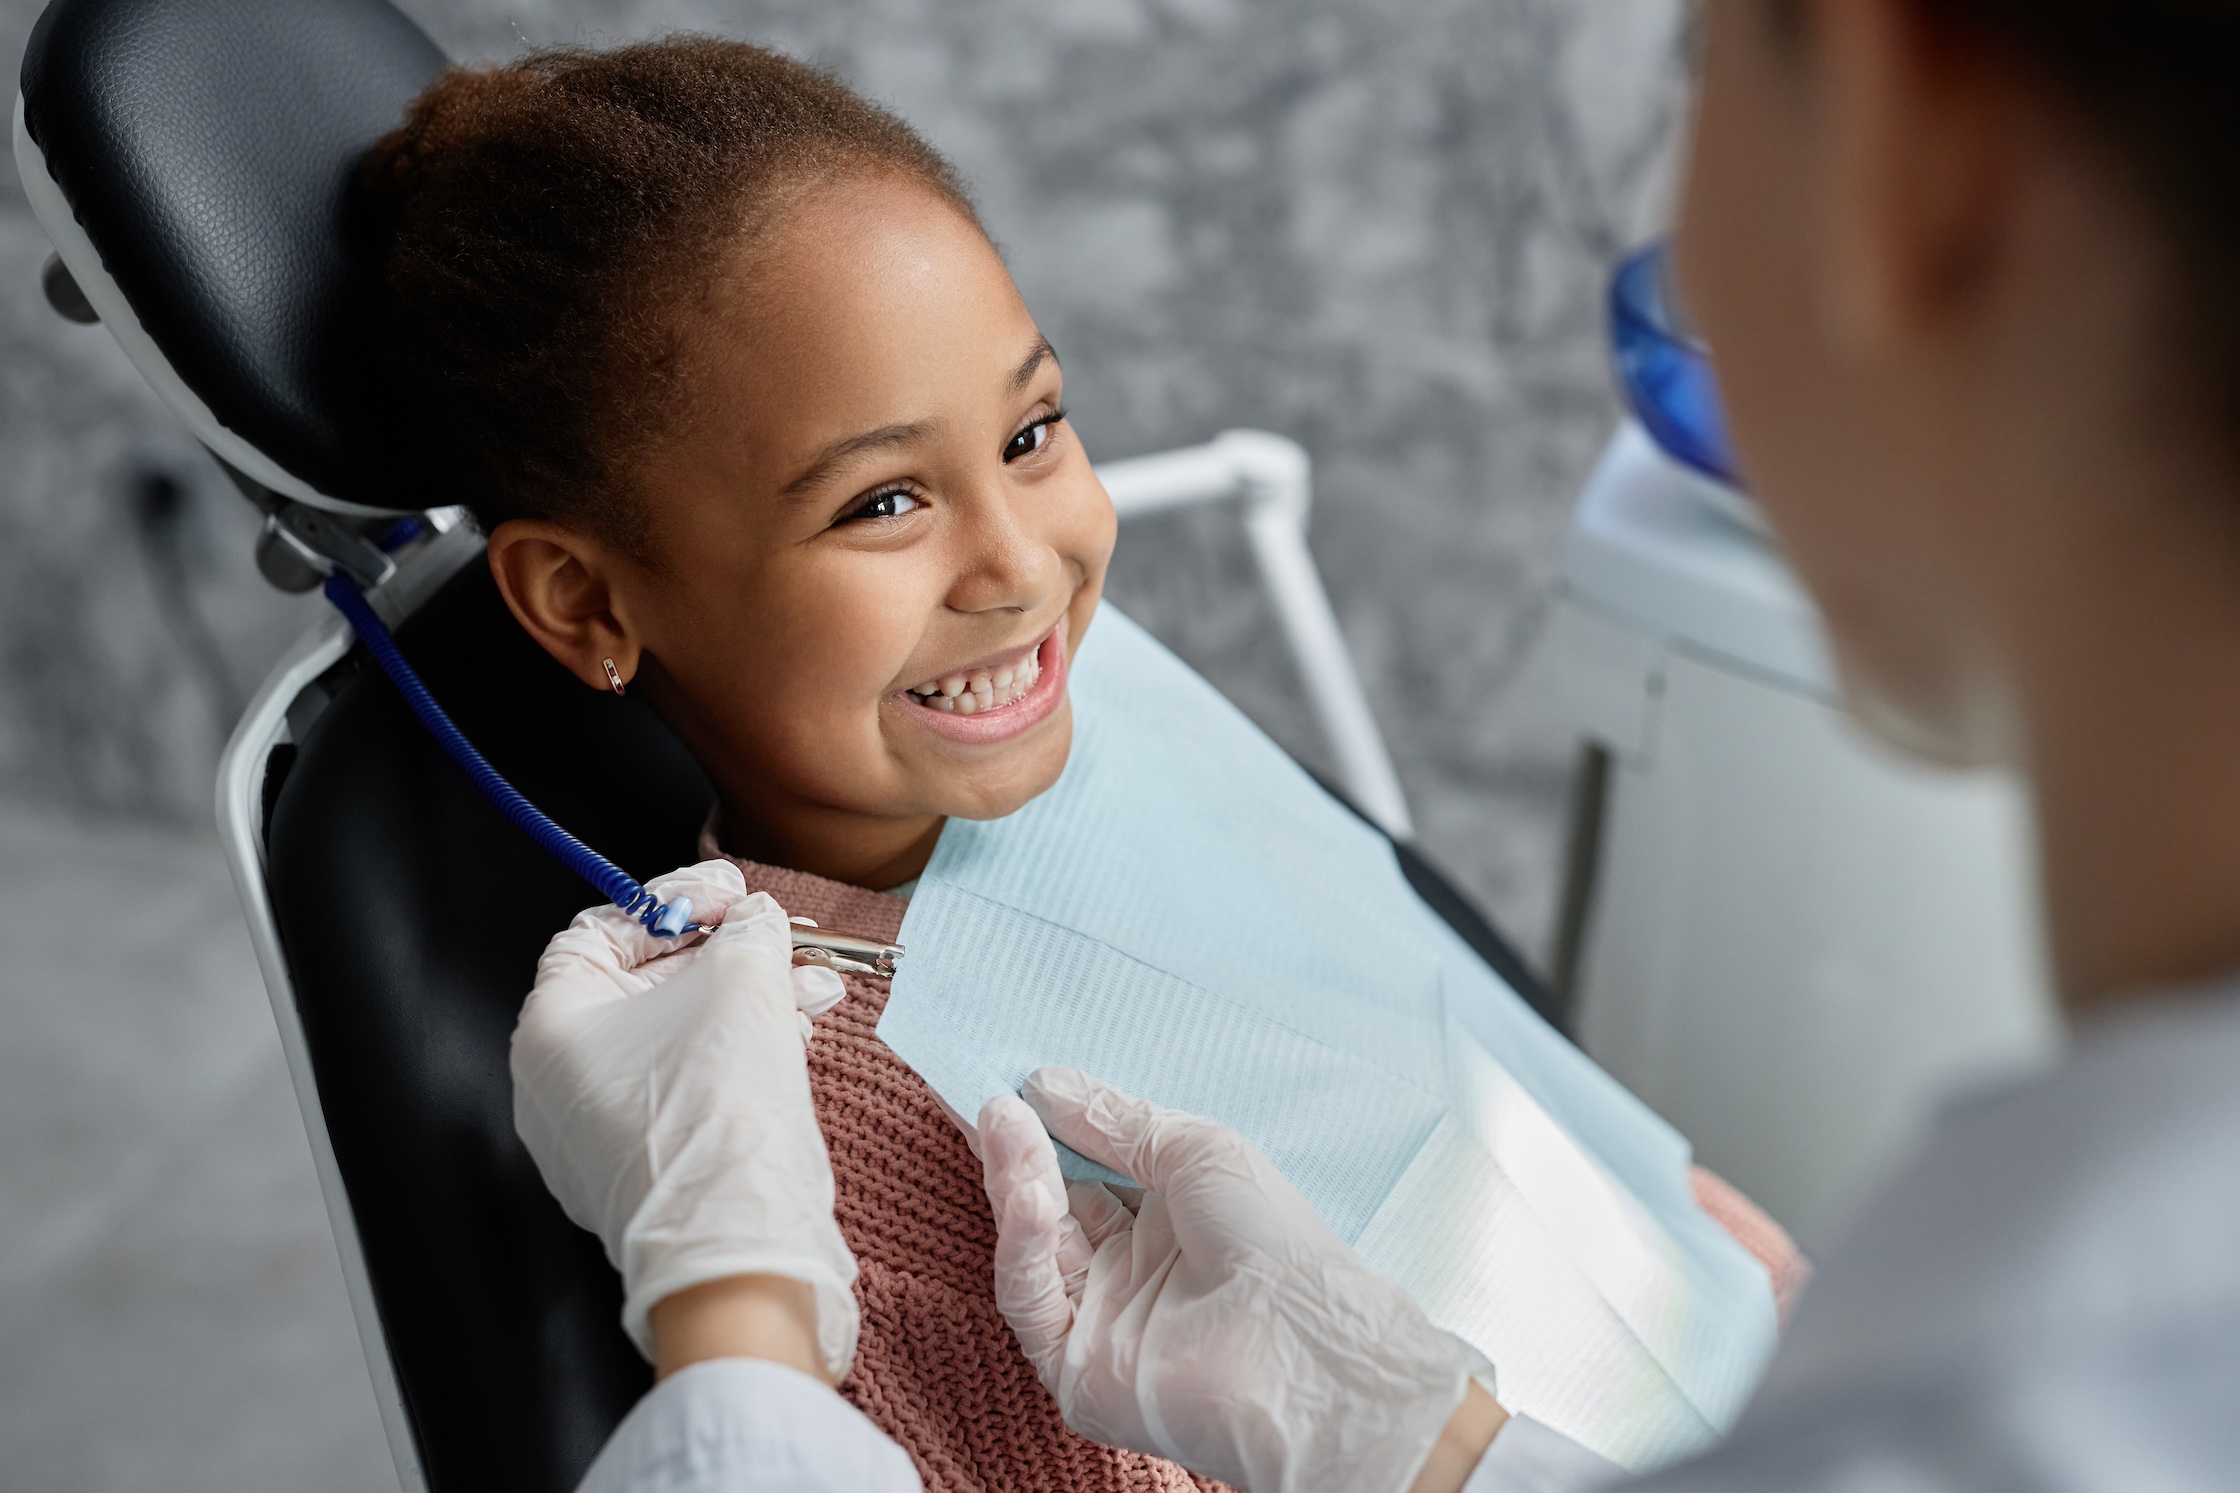 How Do I Know If My Child Needs Dental Work